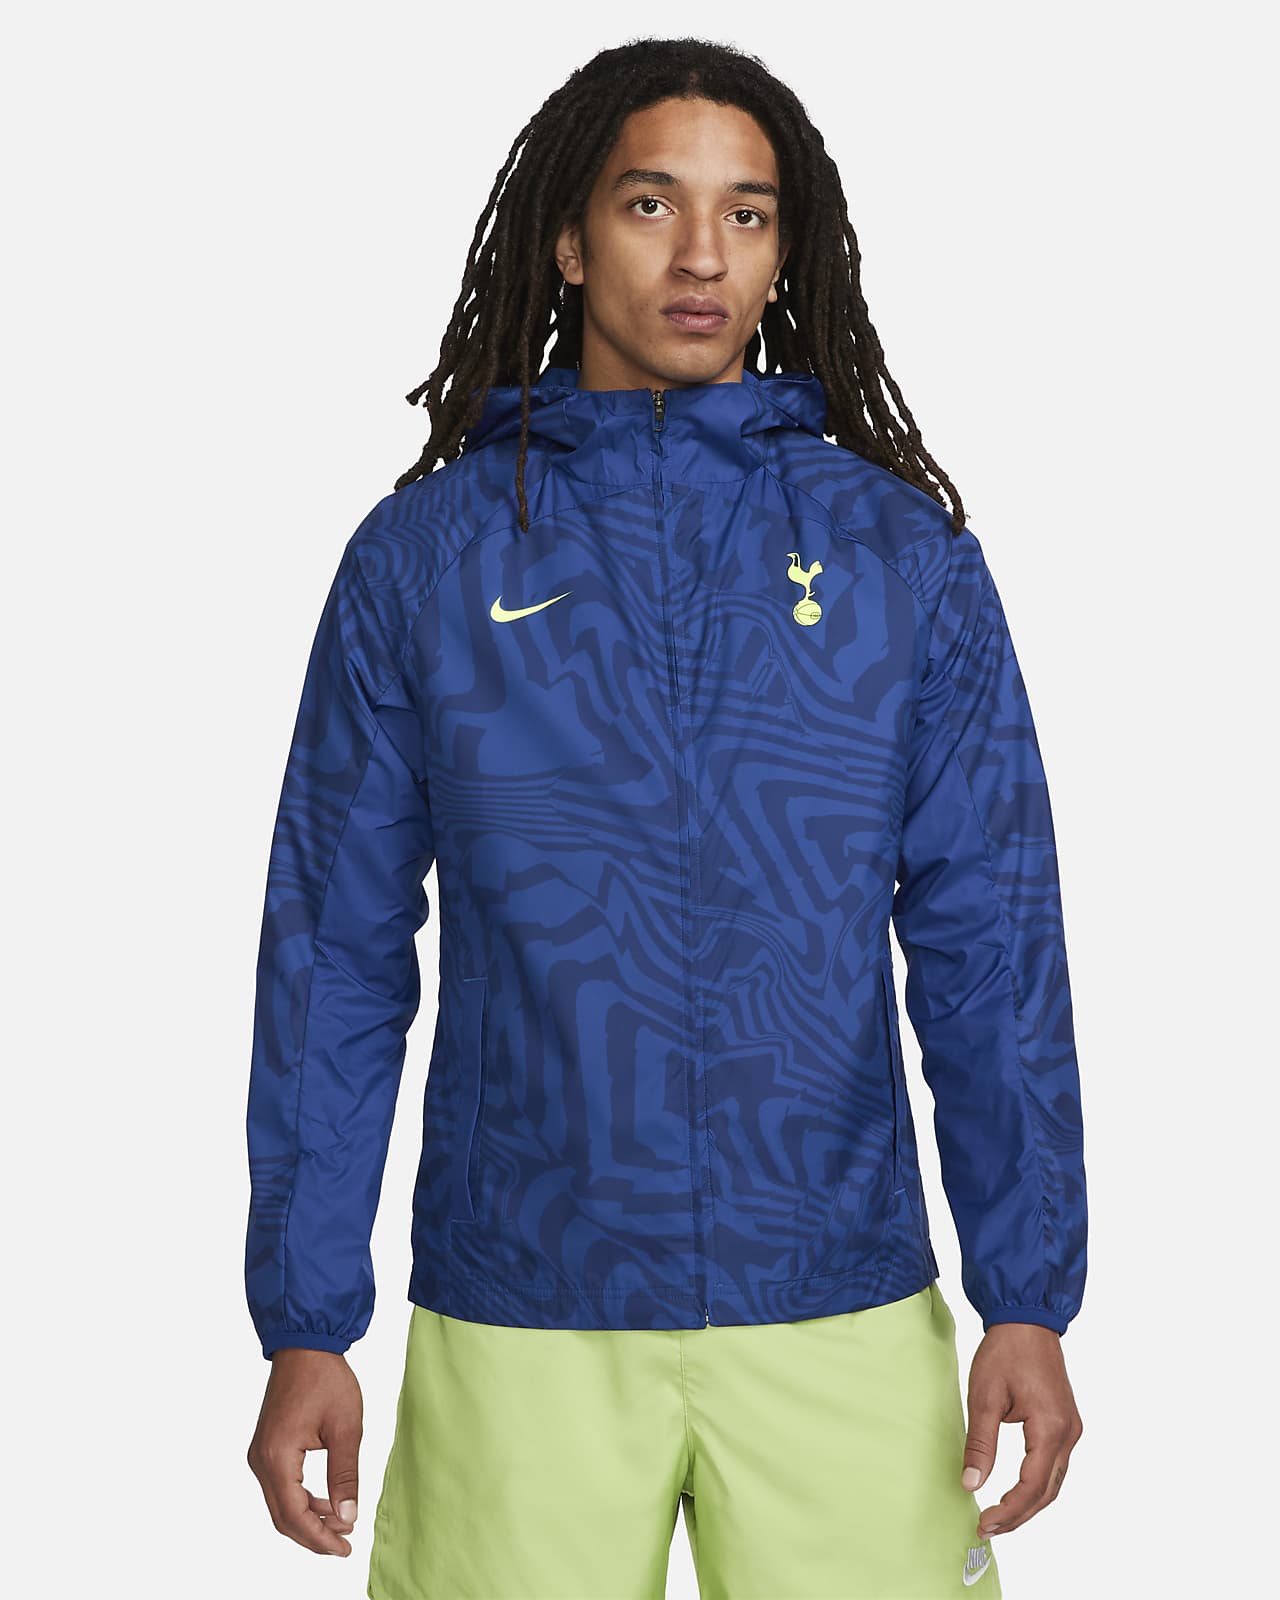 Tottenham Hotspur AWF Men's Jacket.